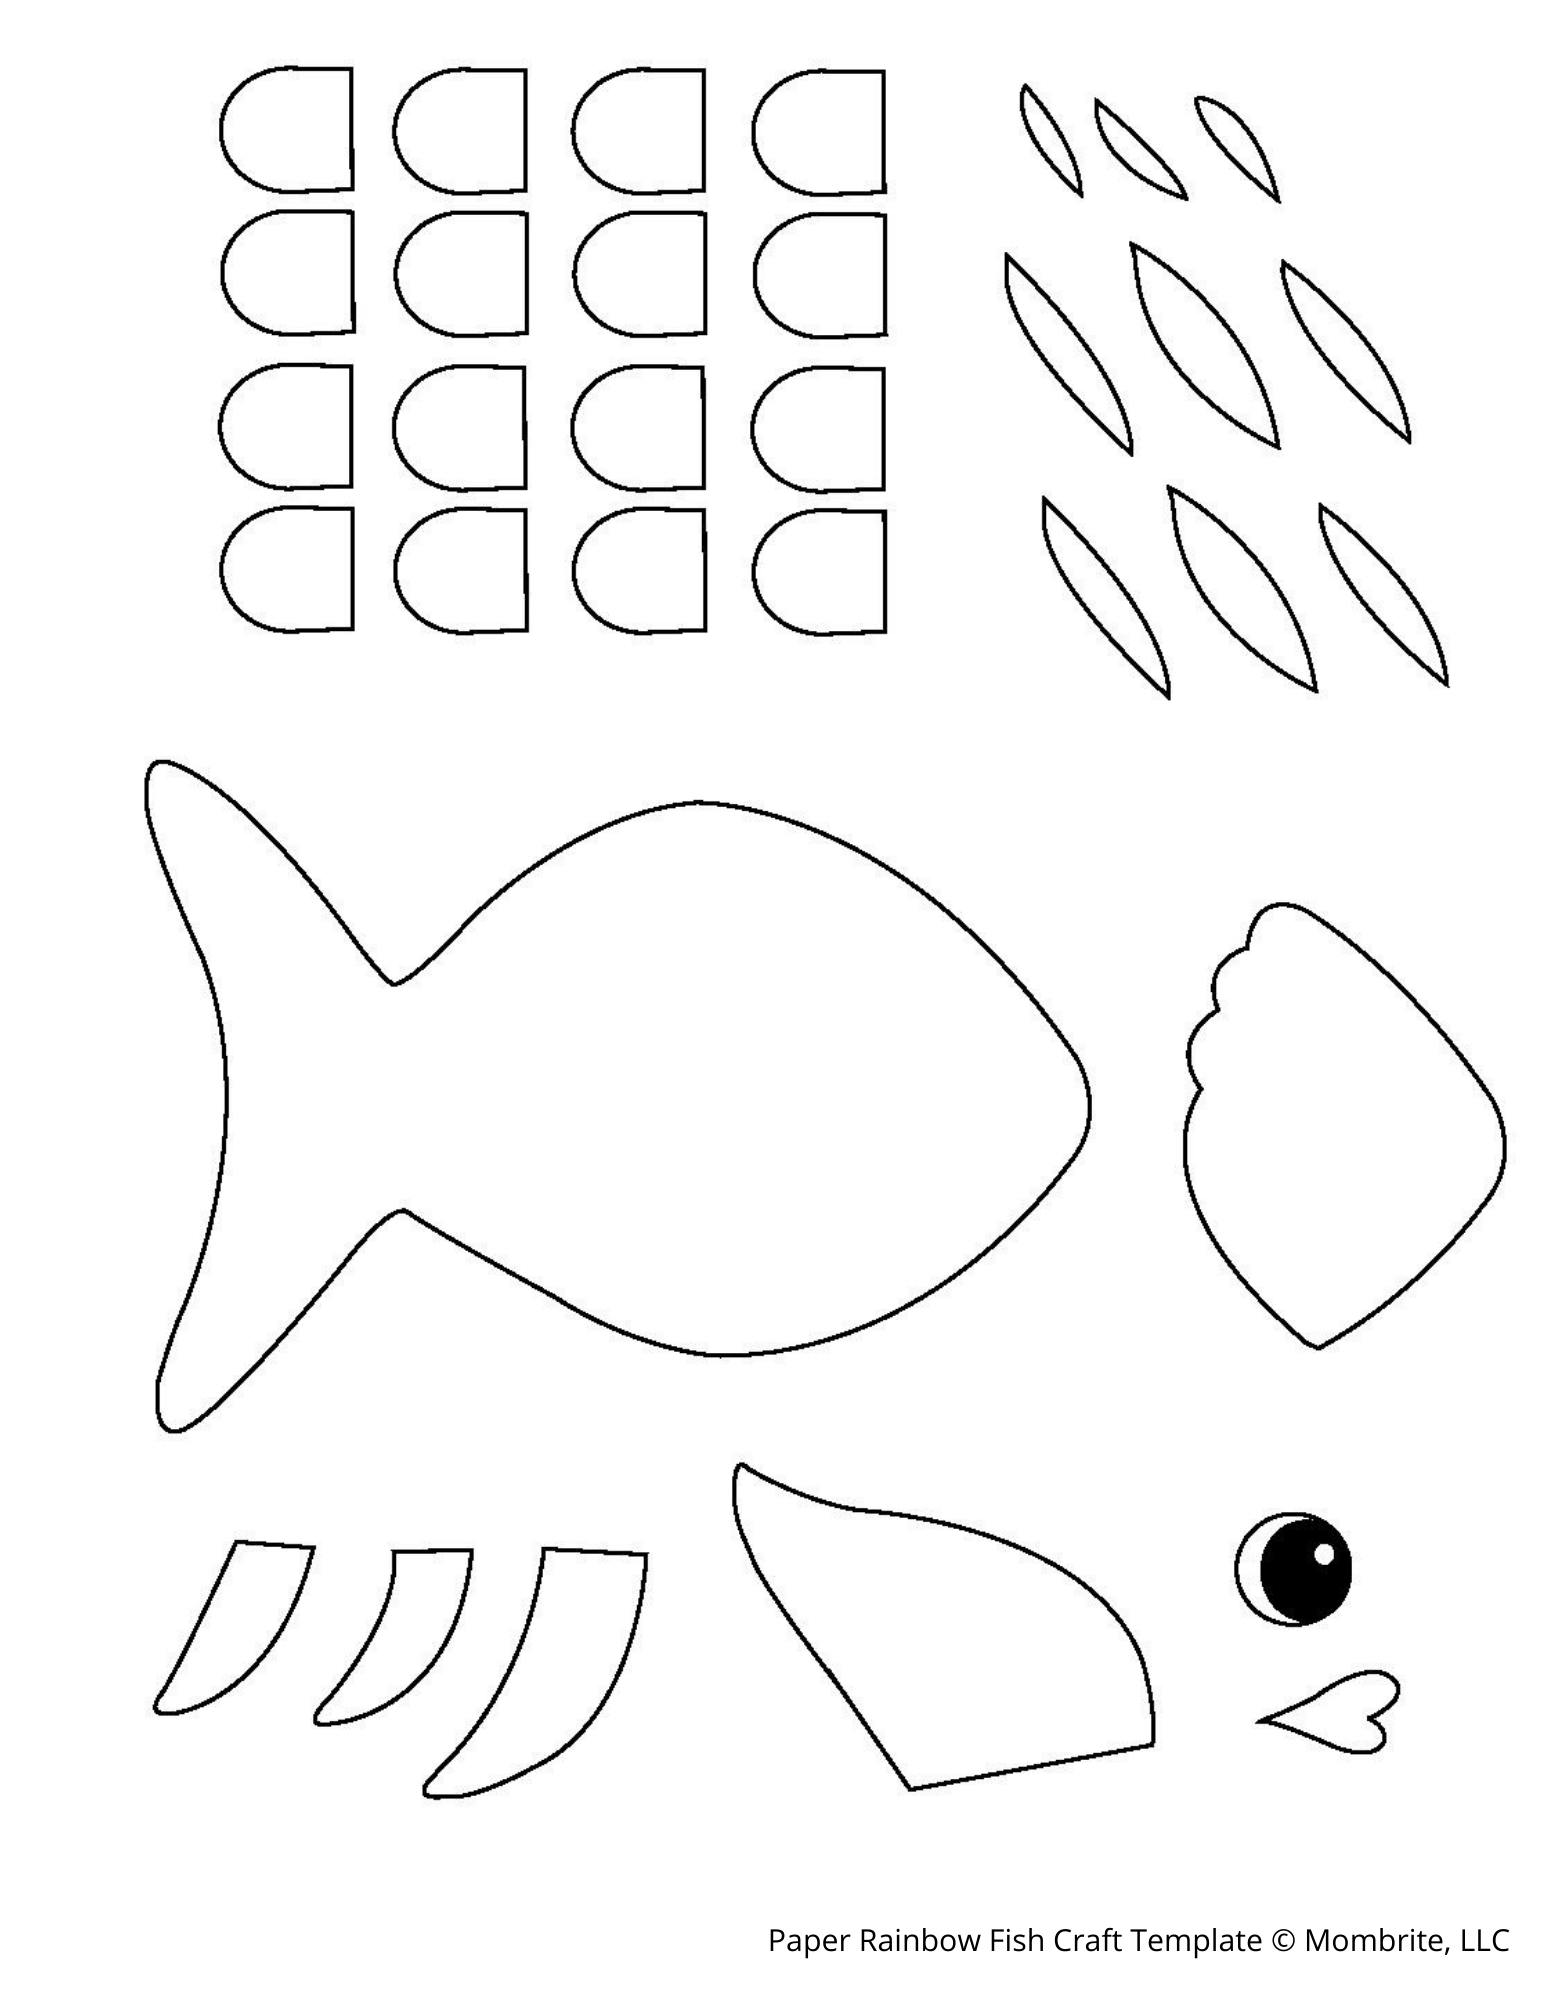 free-paper-rainbow-fish-craft-template